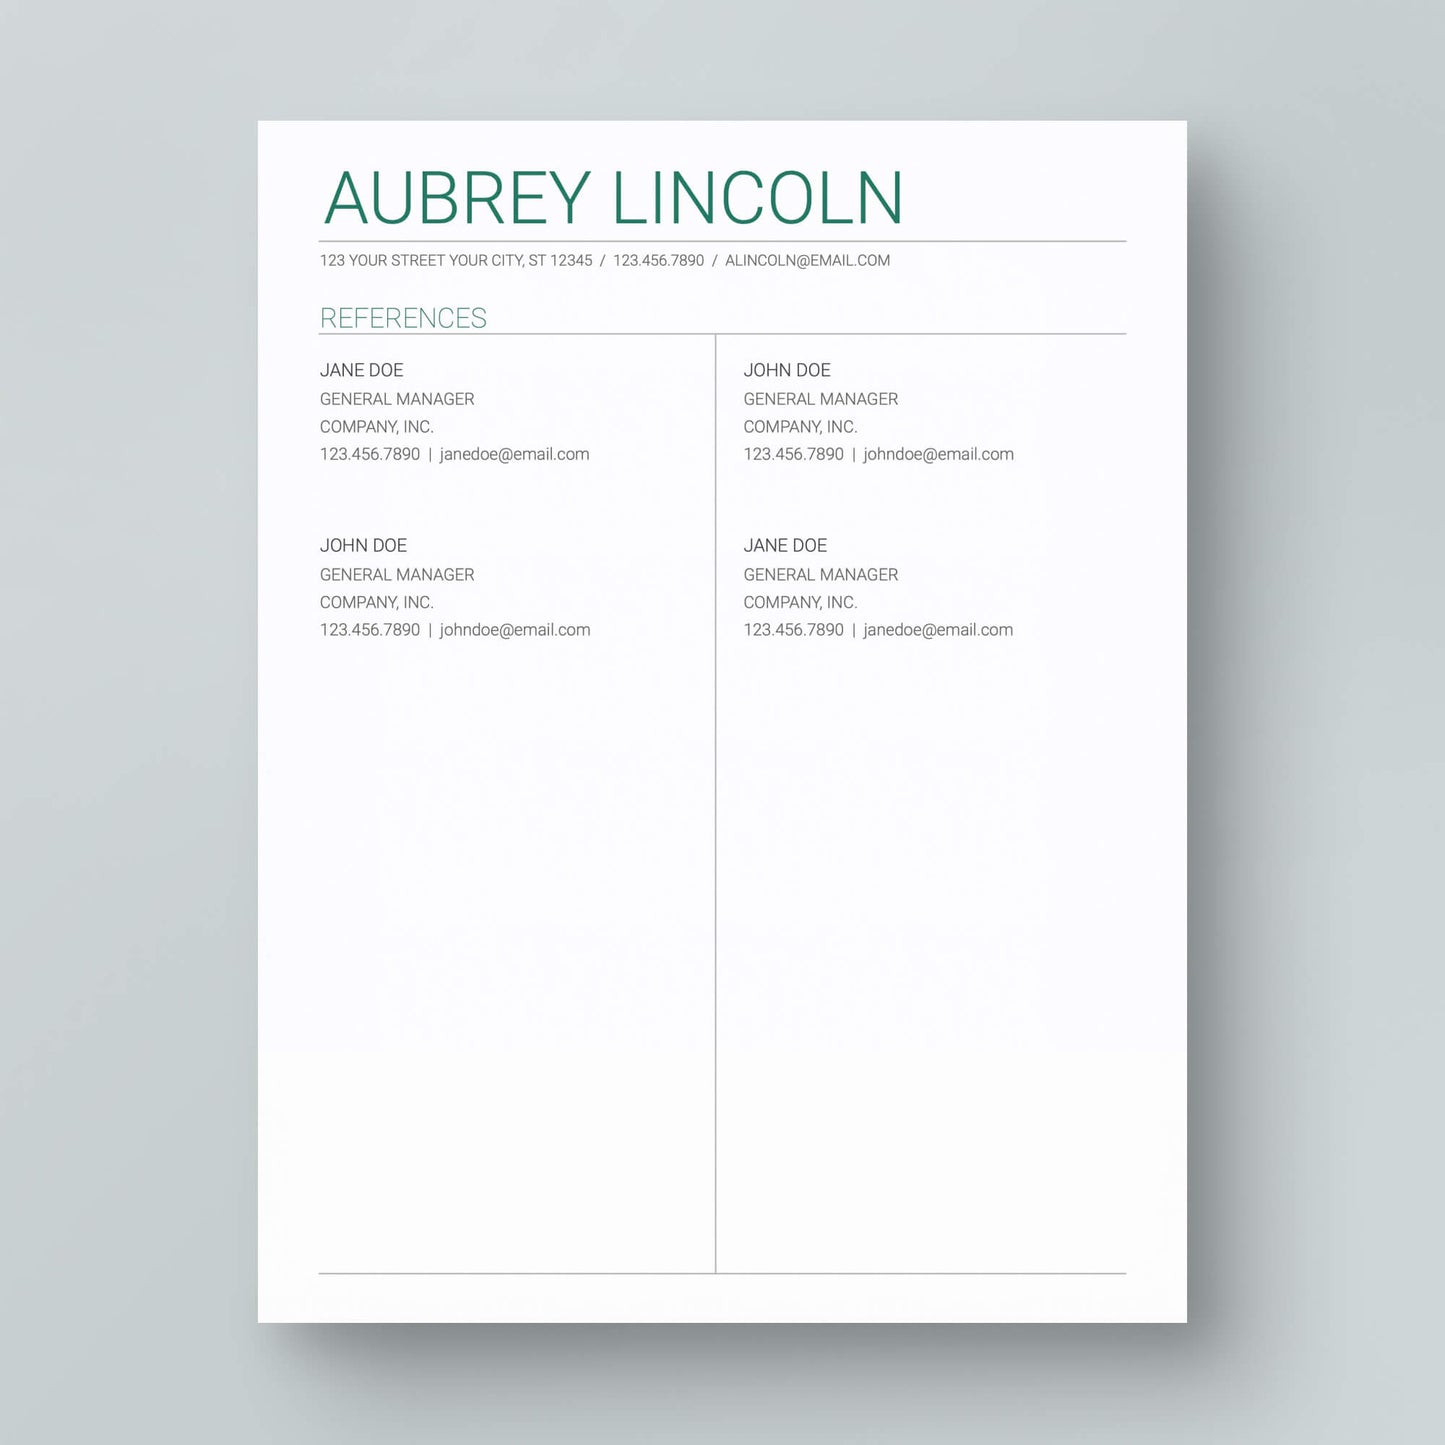 Resume Template: Aubrey Lincoln - MioDocs